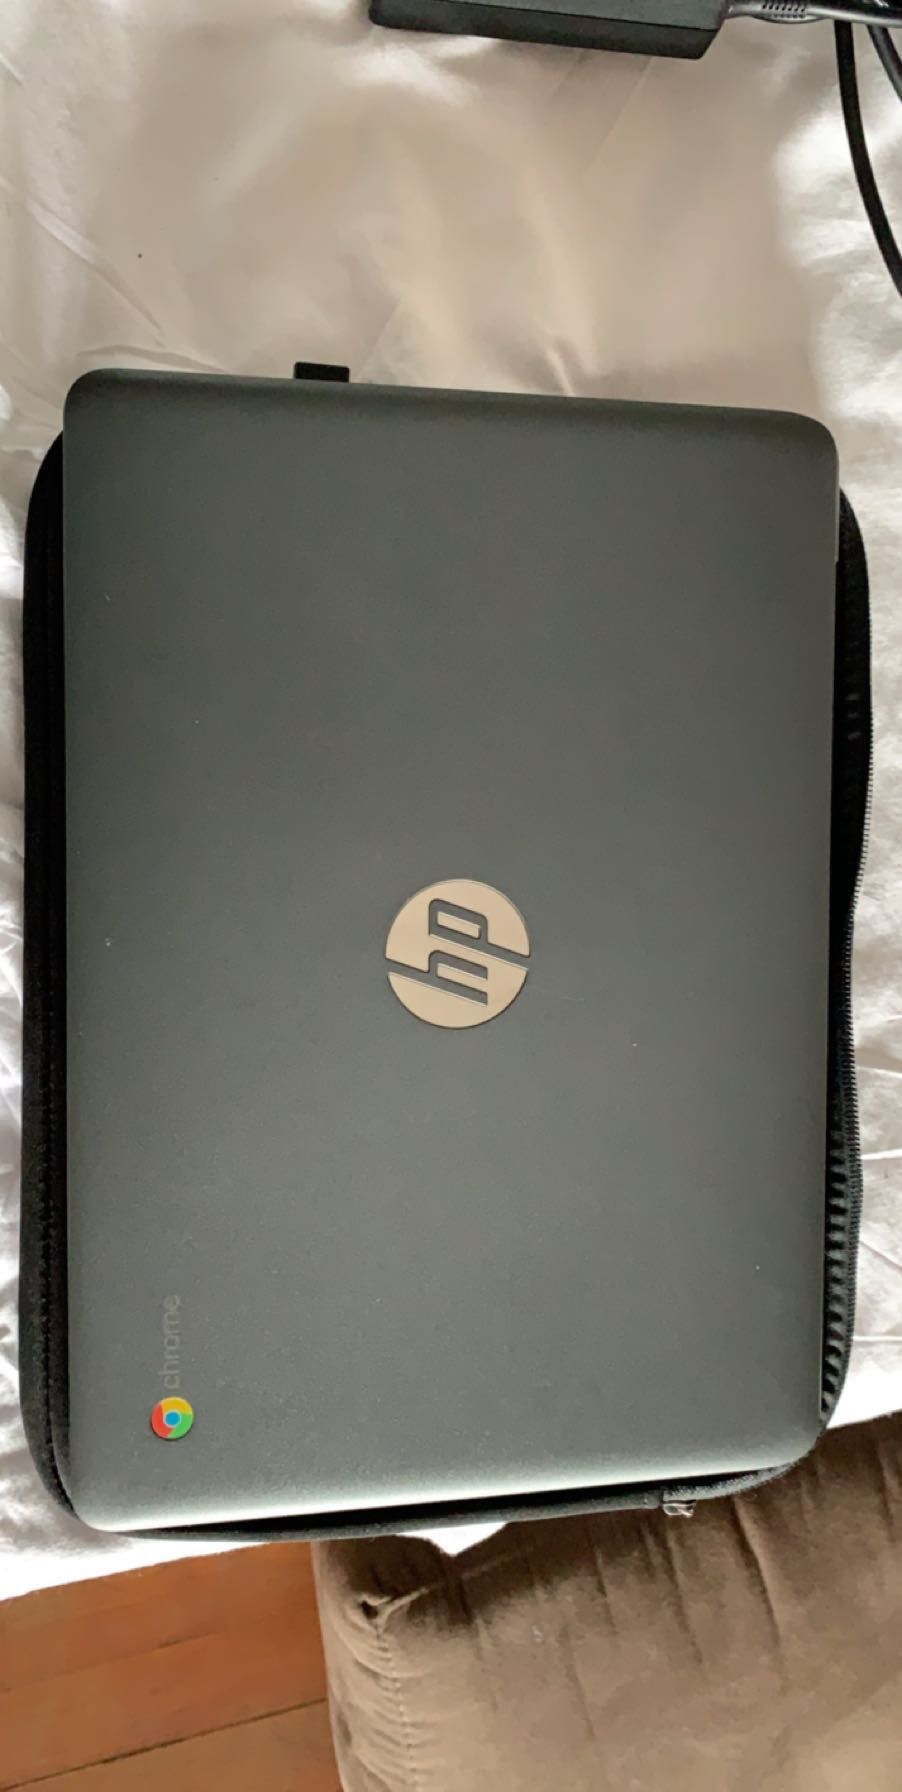 Brand new HP laptop